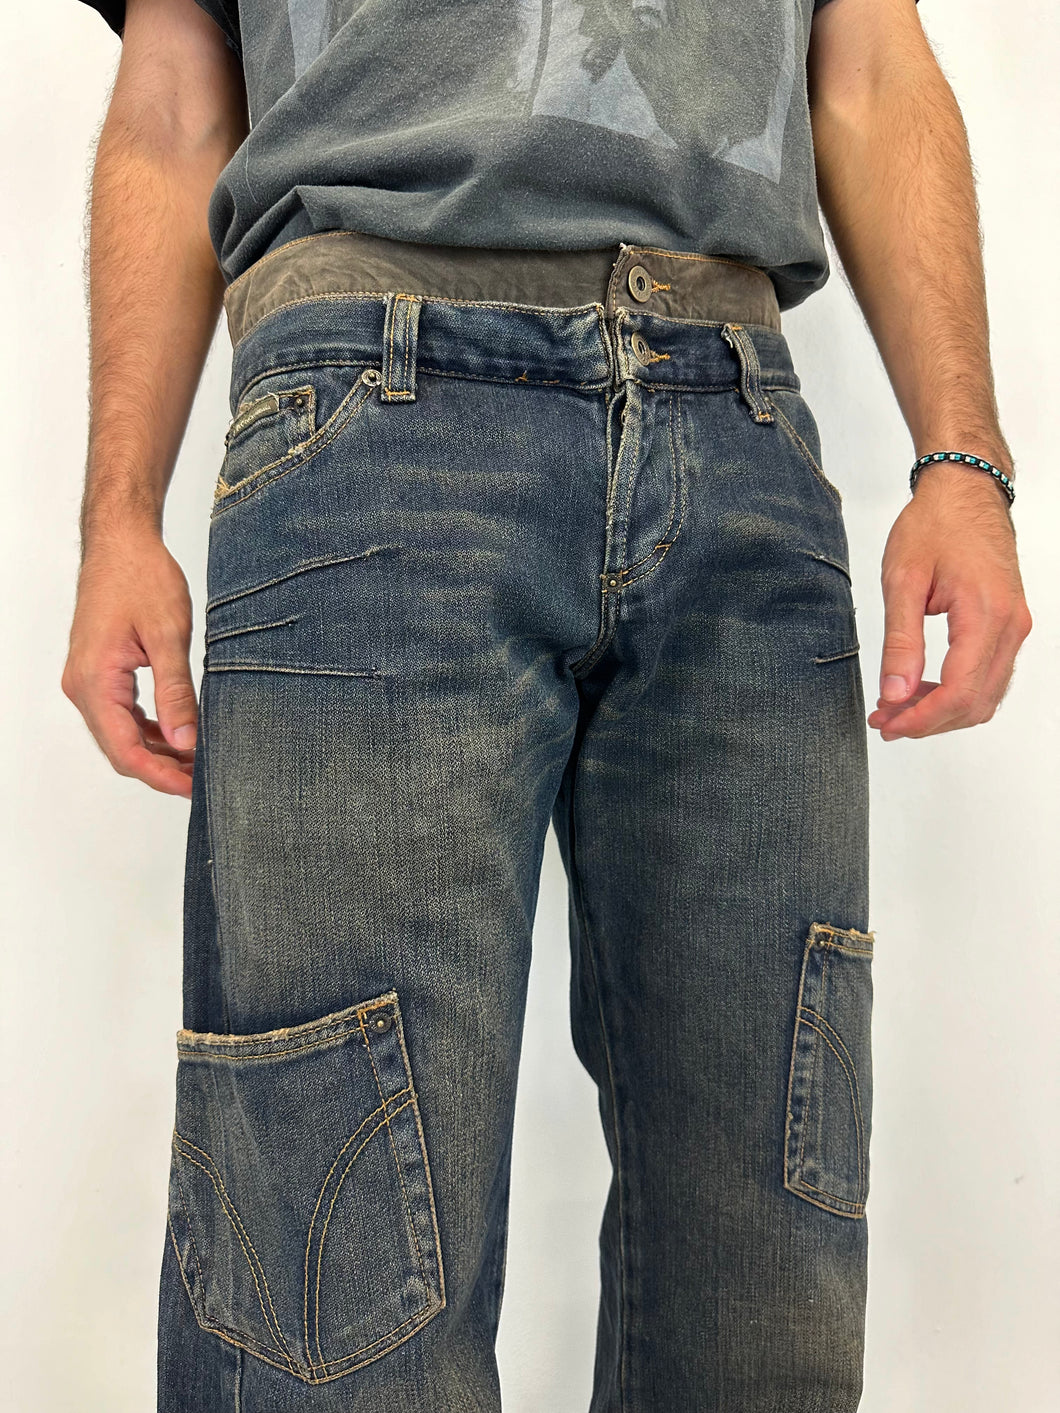 AW2003 Dolce & Gabbana double waisted asymmetrical pockets jeans